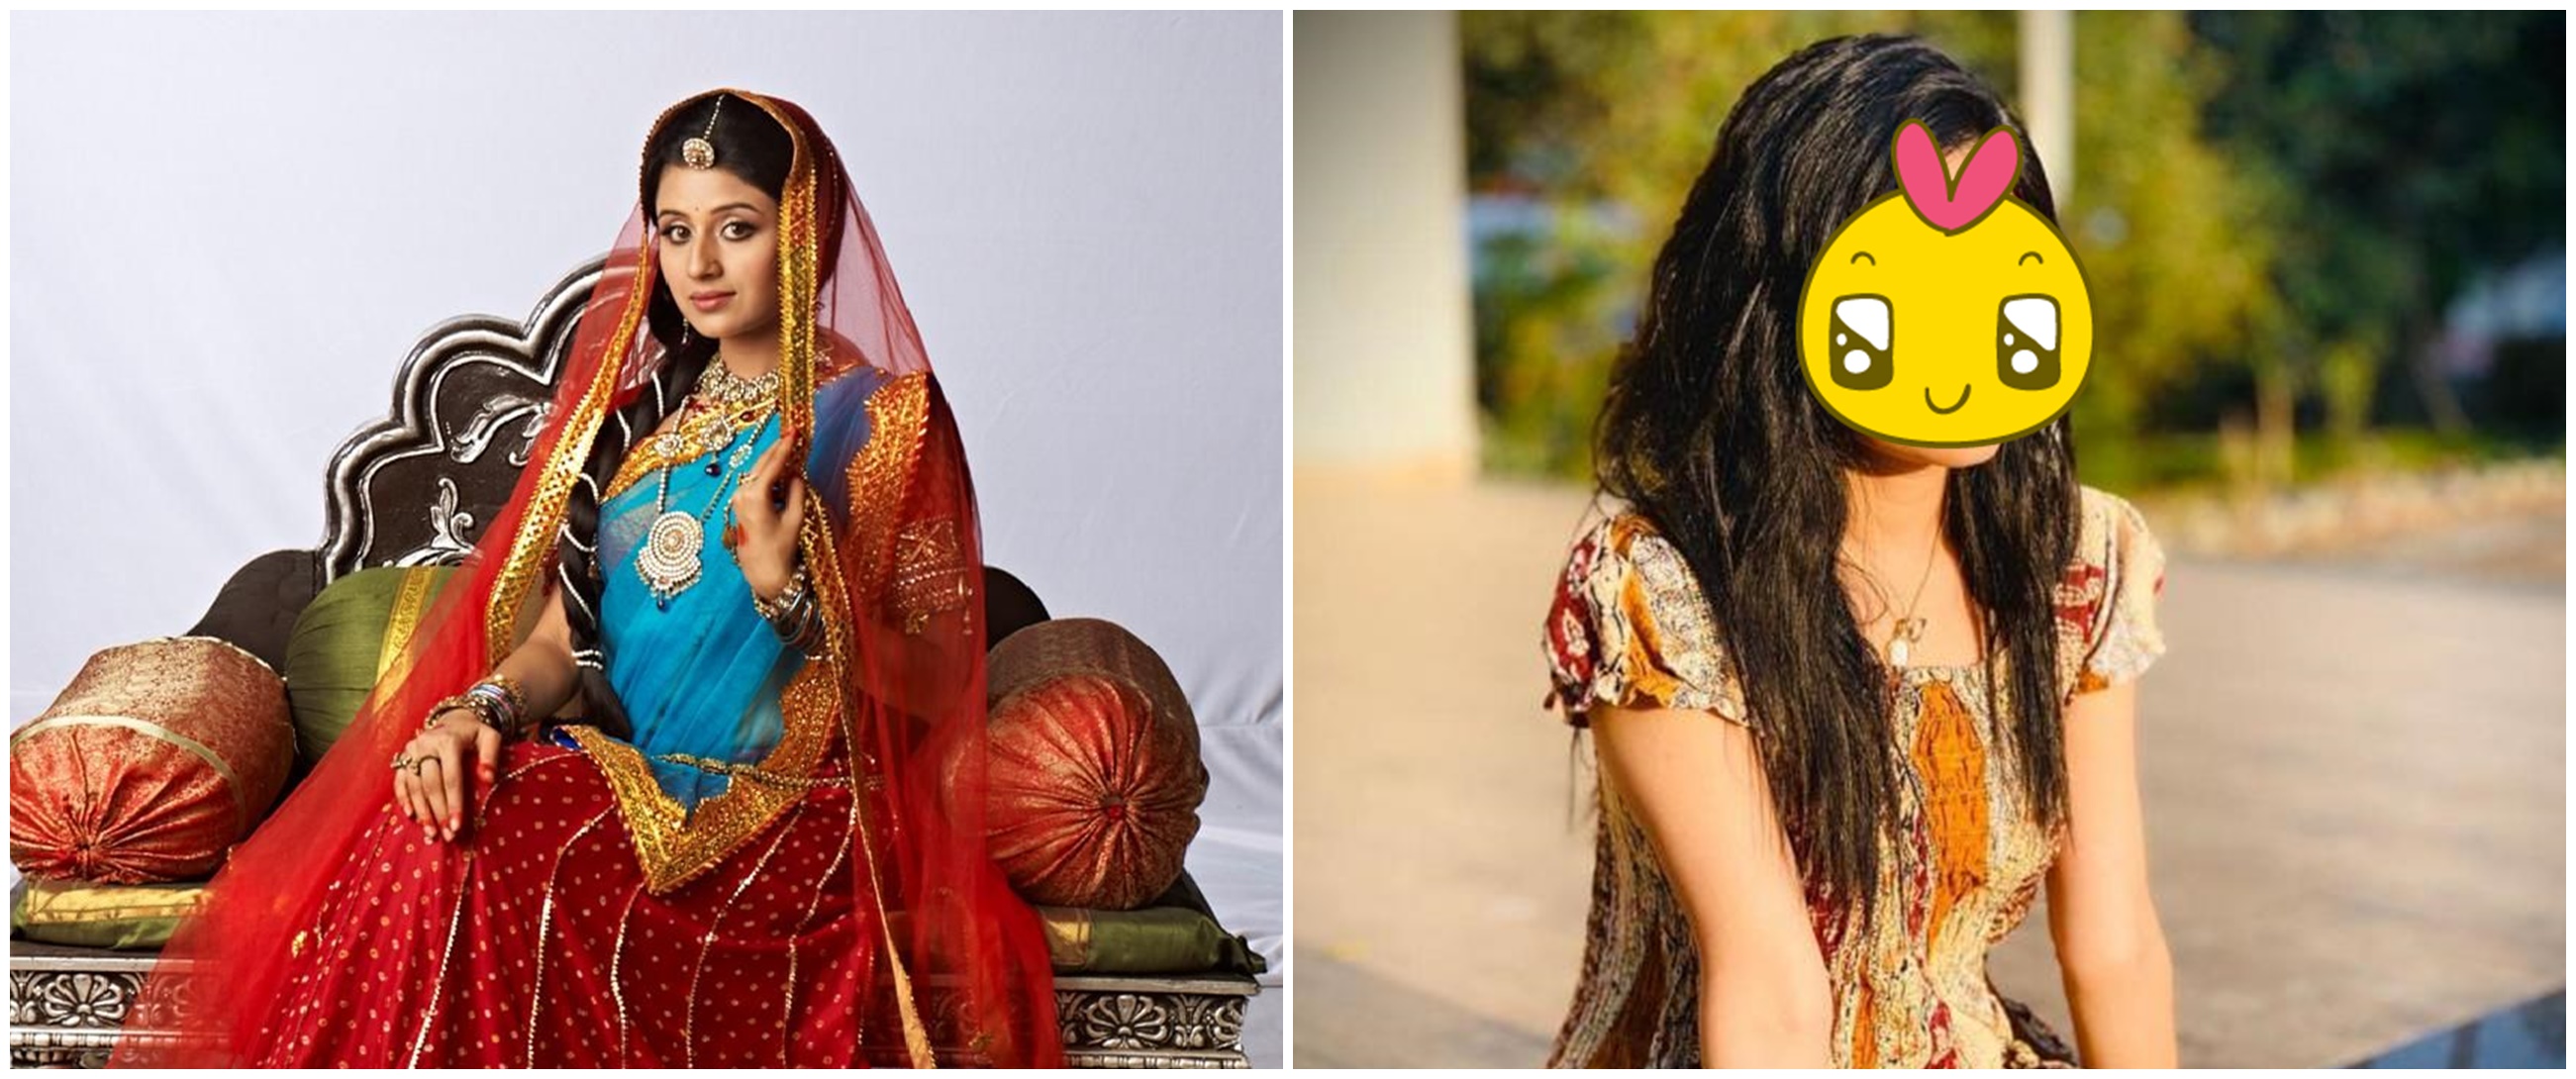 Potret 6 pemain wanita Jodha Akbar tanpa makeup, cantiknya natural